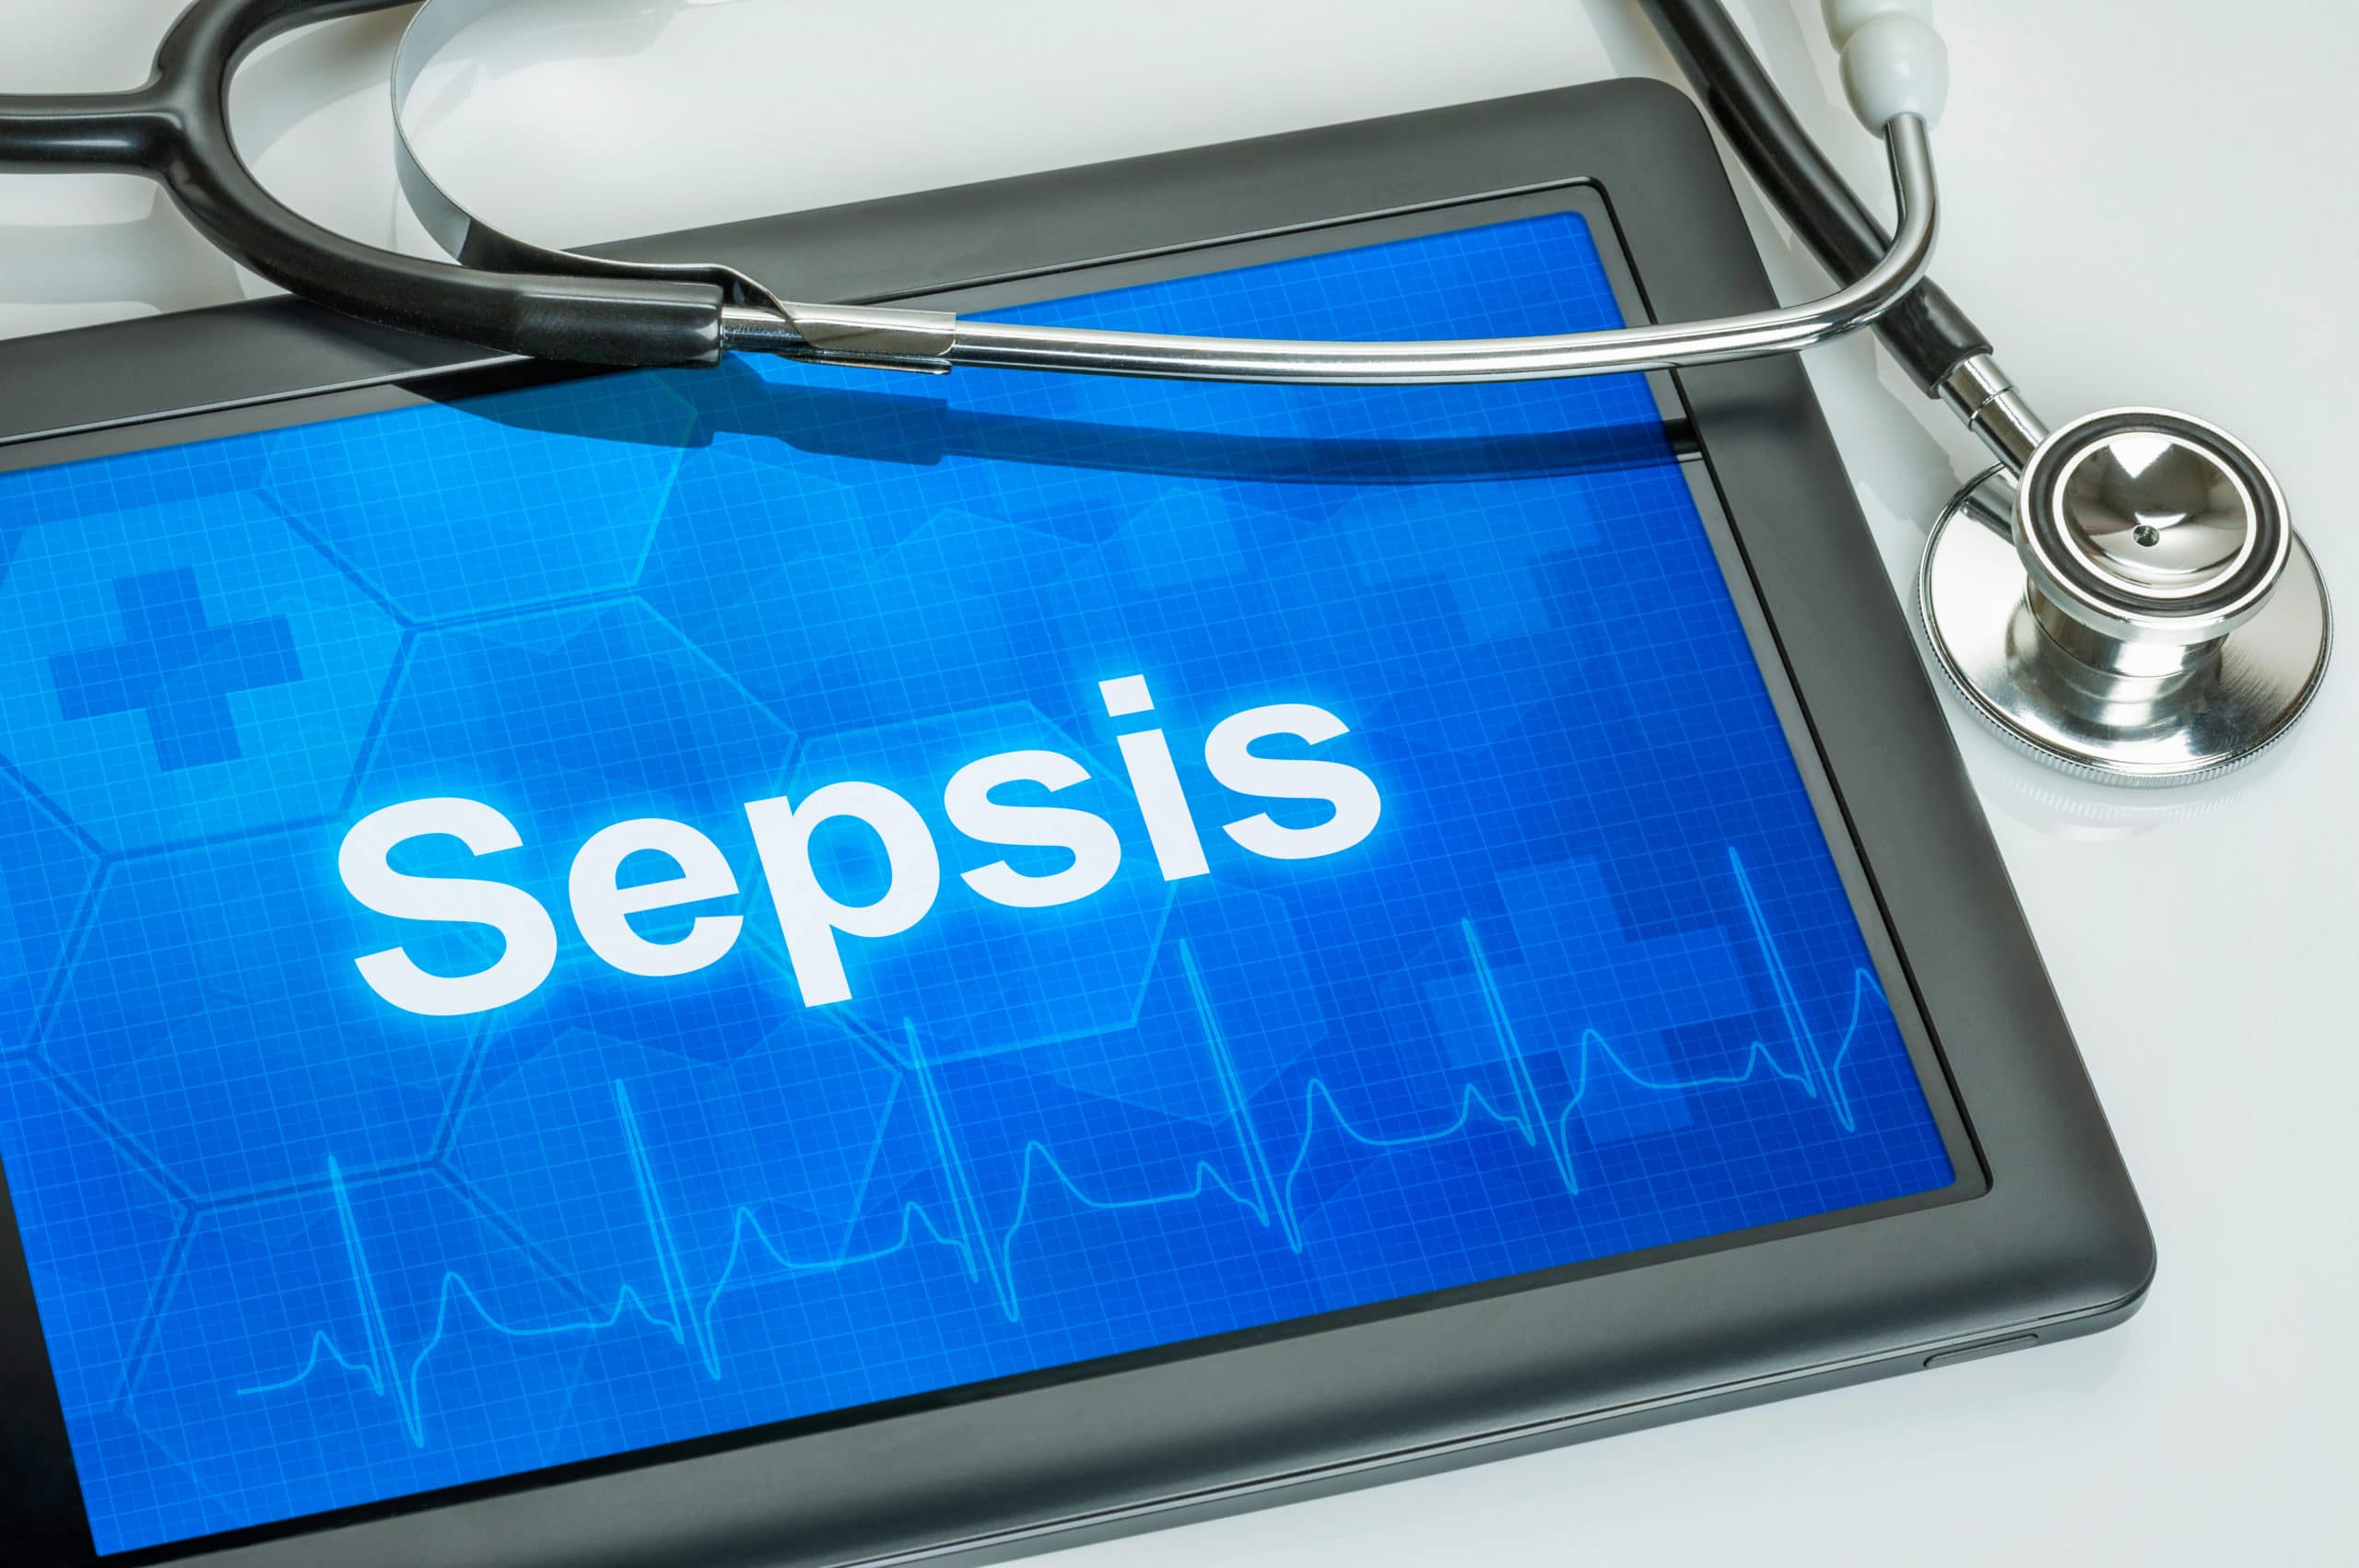 risk factors for sepsis